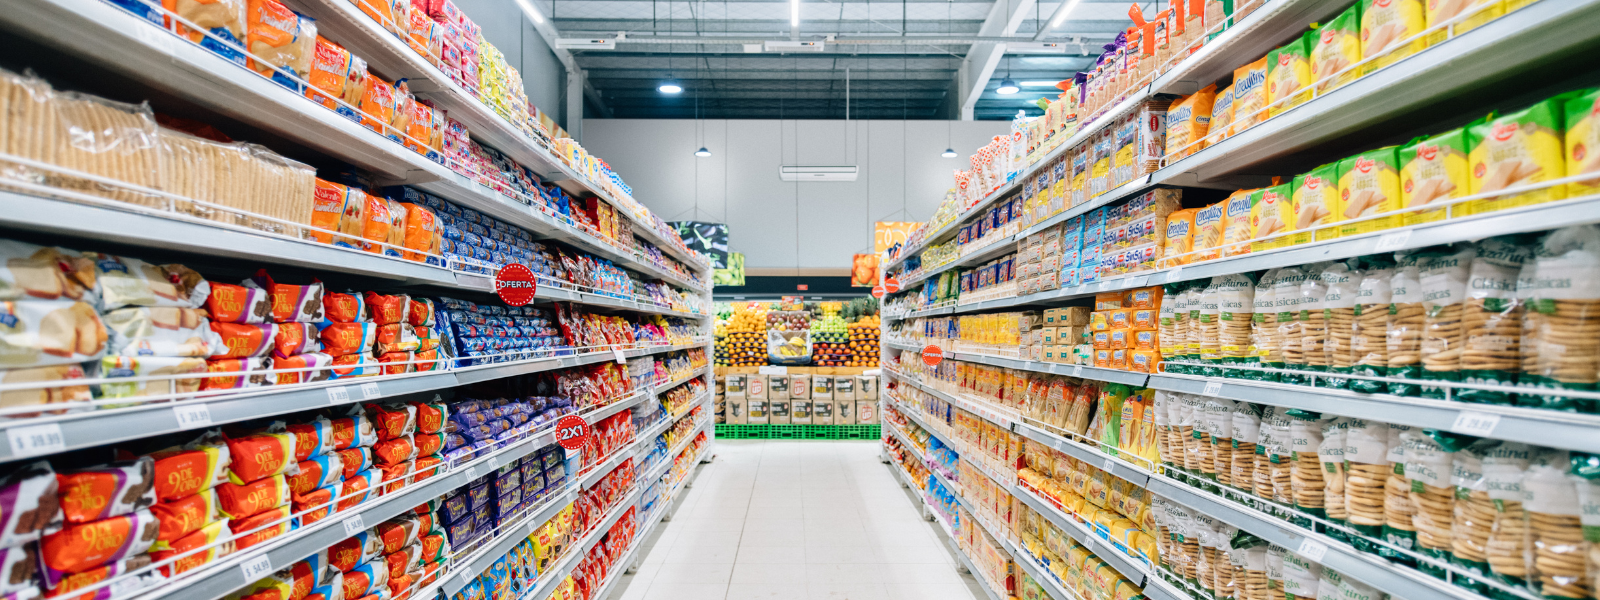 Supermarket Image